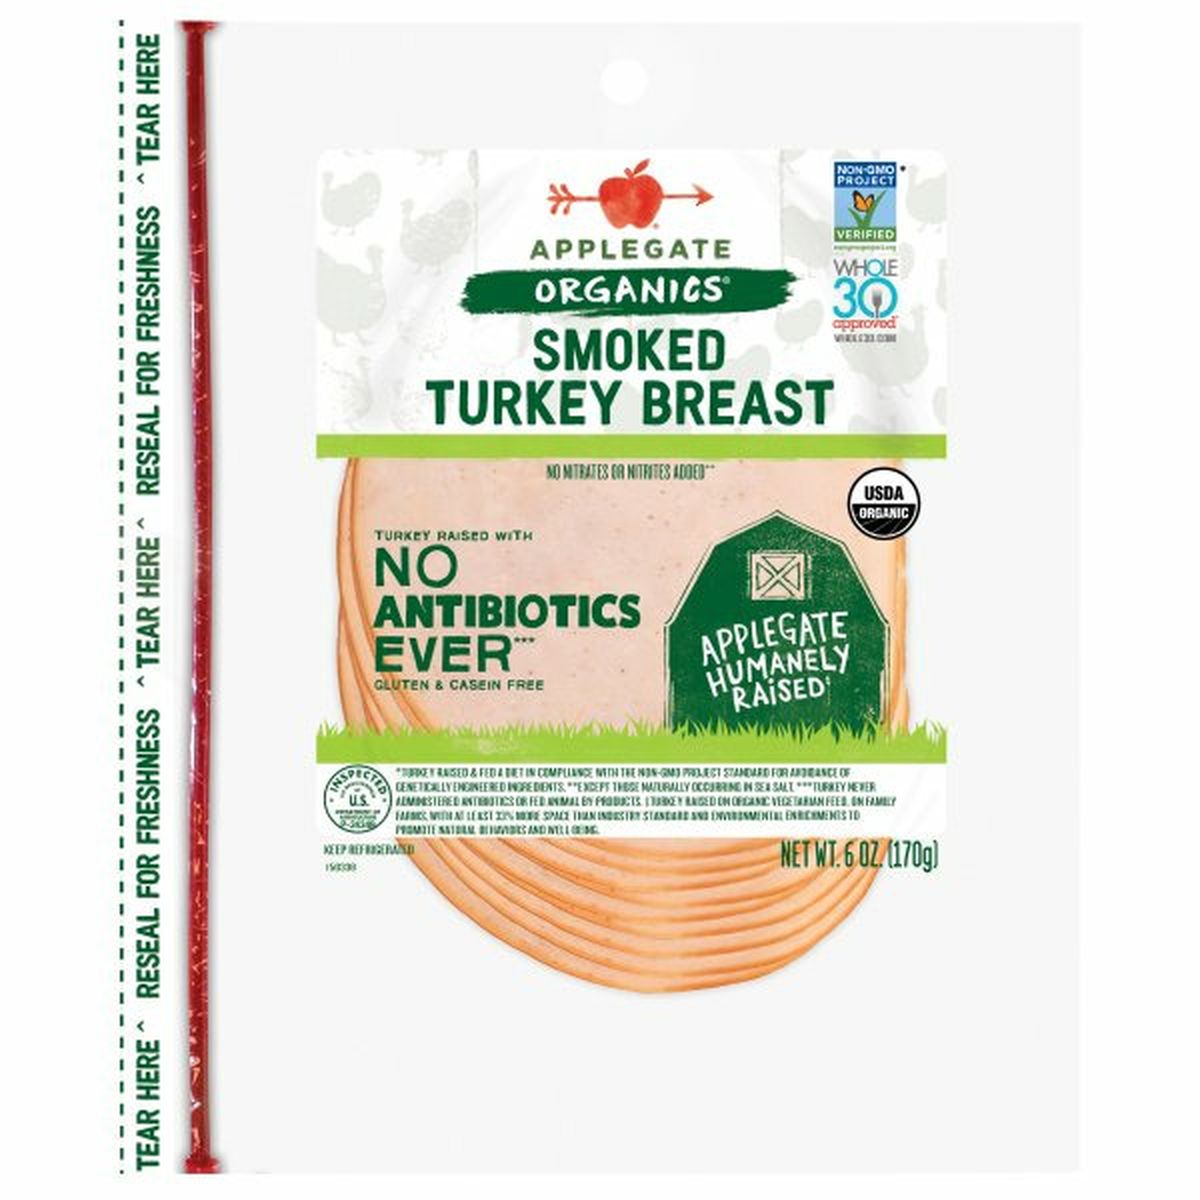 Calories in Applegate Turkey Breast, Smoked